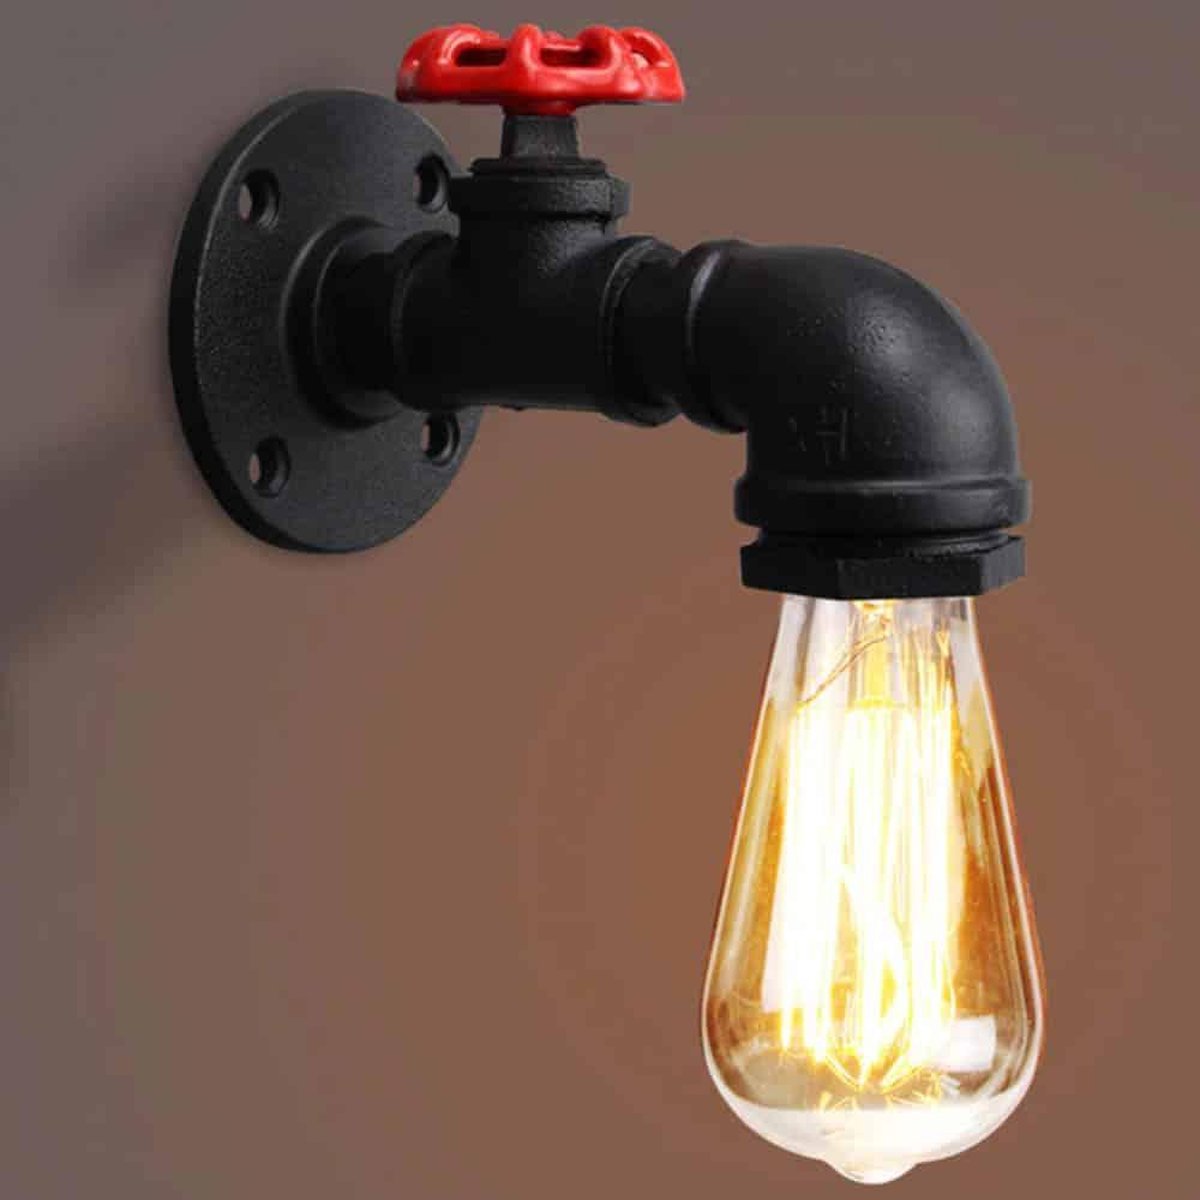 SensaHome Kraan Wandlamp - Industriële Lamp - Retro Binnenverlichting - E27 Fitting Hoeklamp - Inclusief Lamp - Zwart